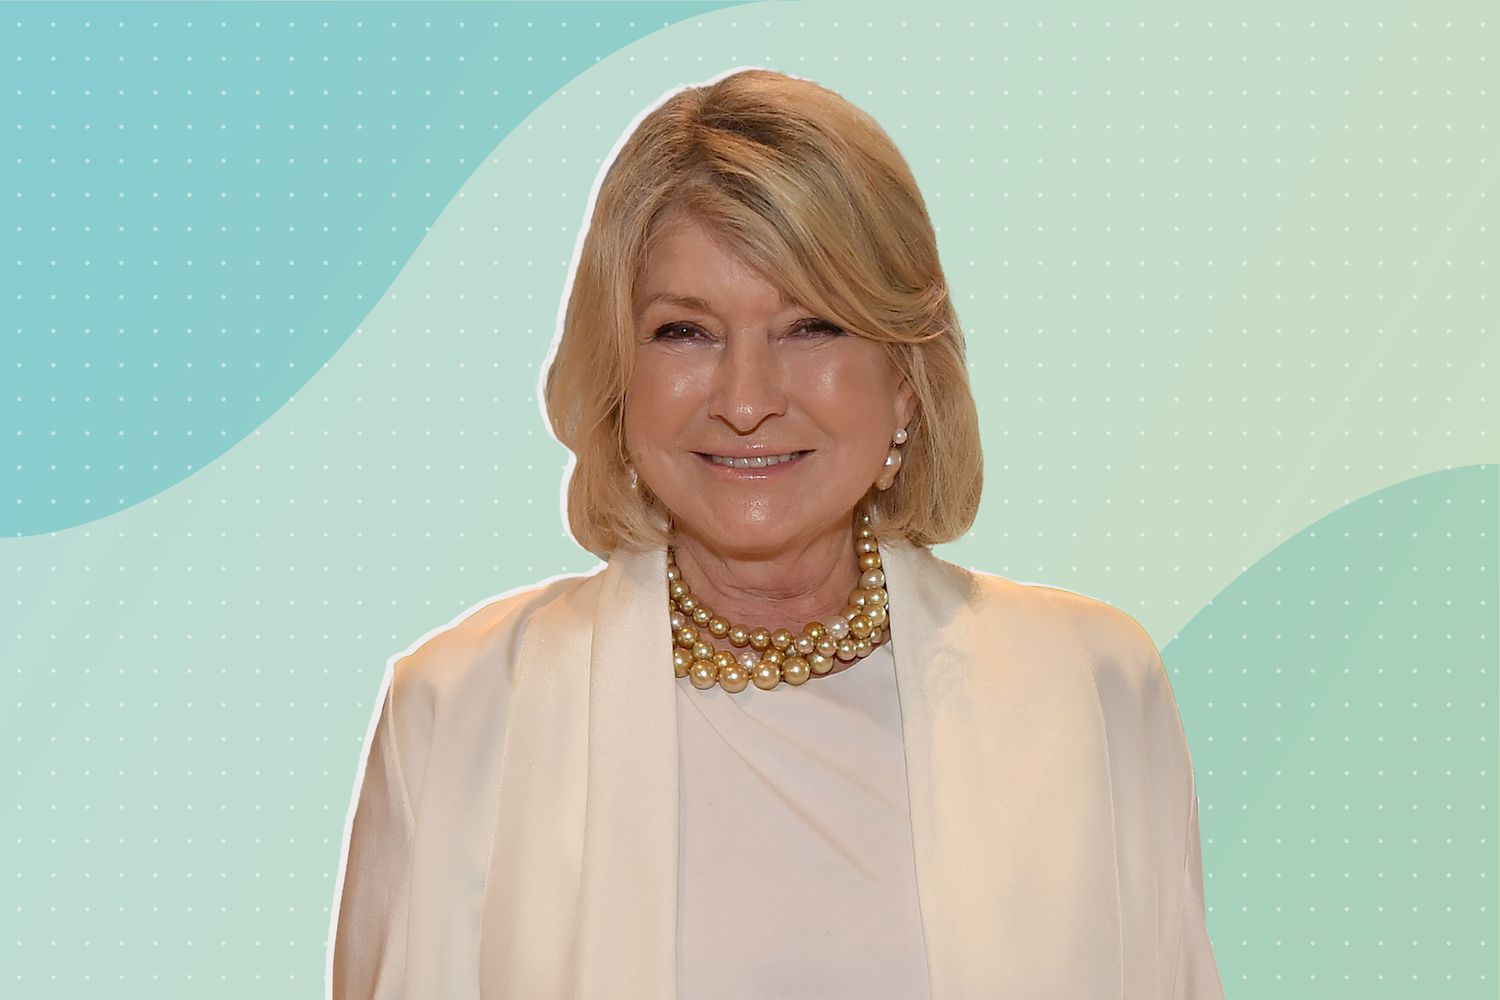 Martha Stewart smiling against a blue background